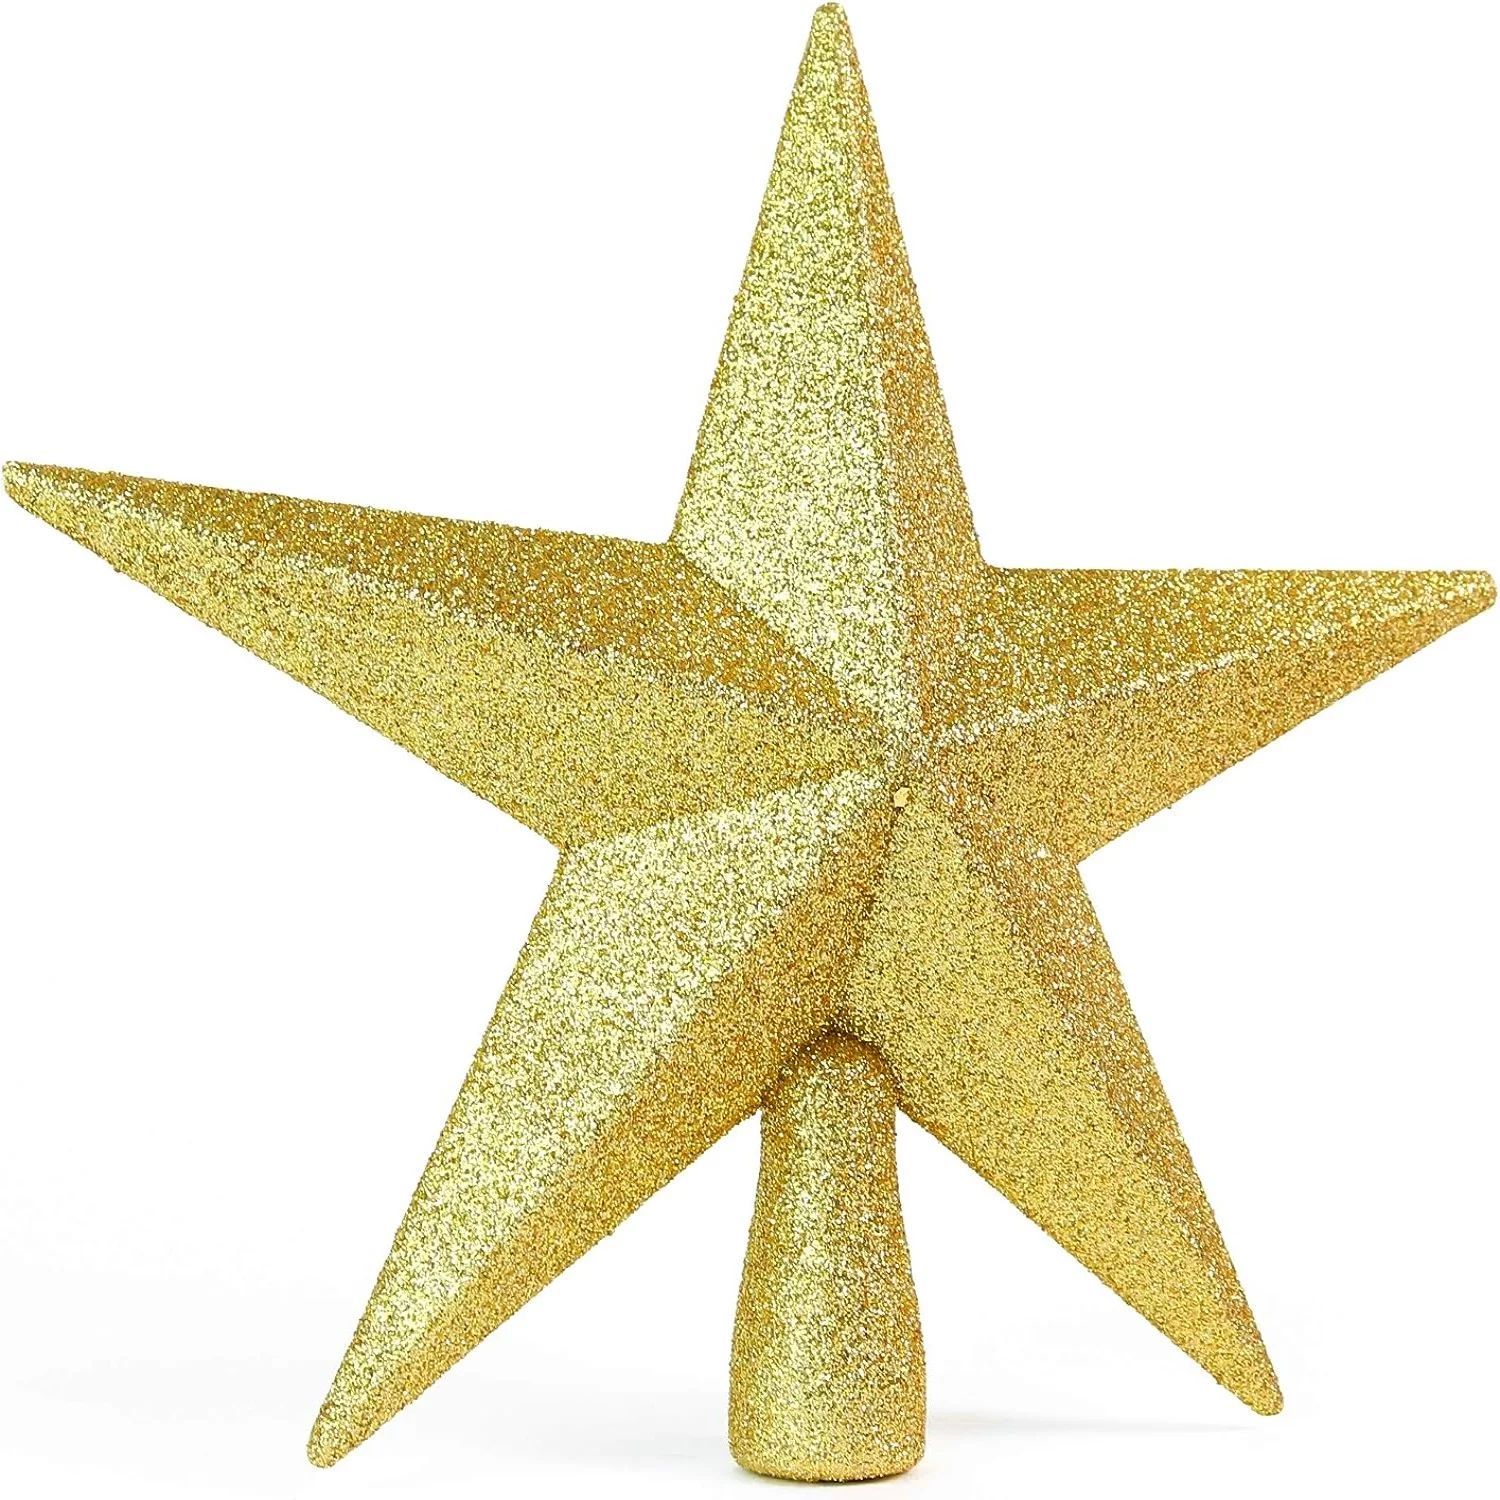 Funsmile Christmas Star Tree Topper Gold 9 inch Glittered Bethlehem Star Treetop for Holiday Orna... | Walmart (US)